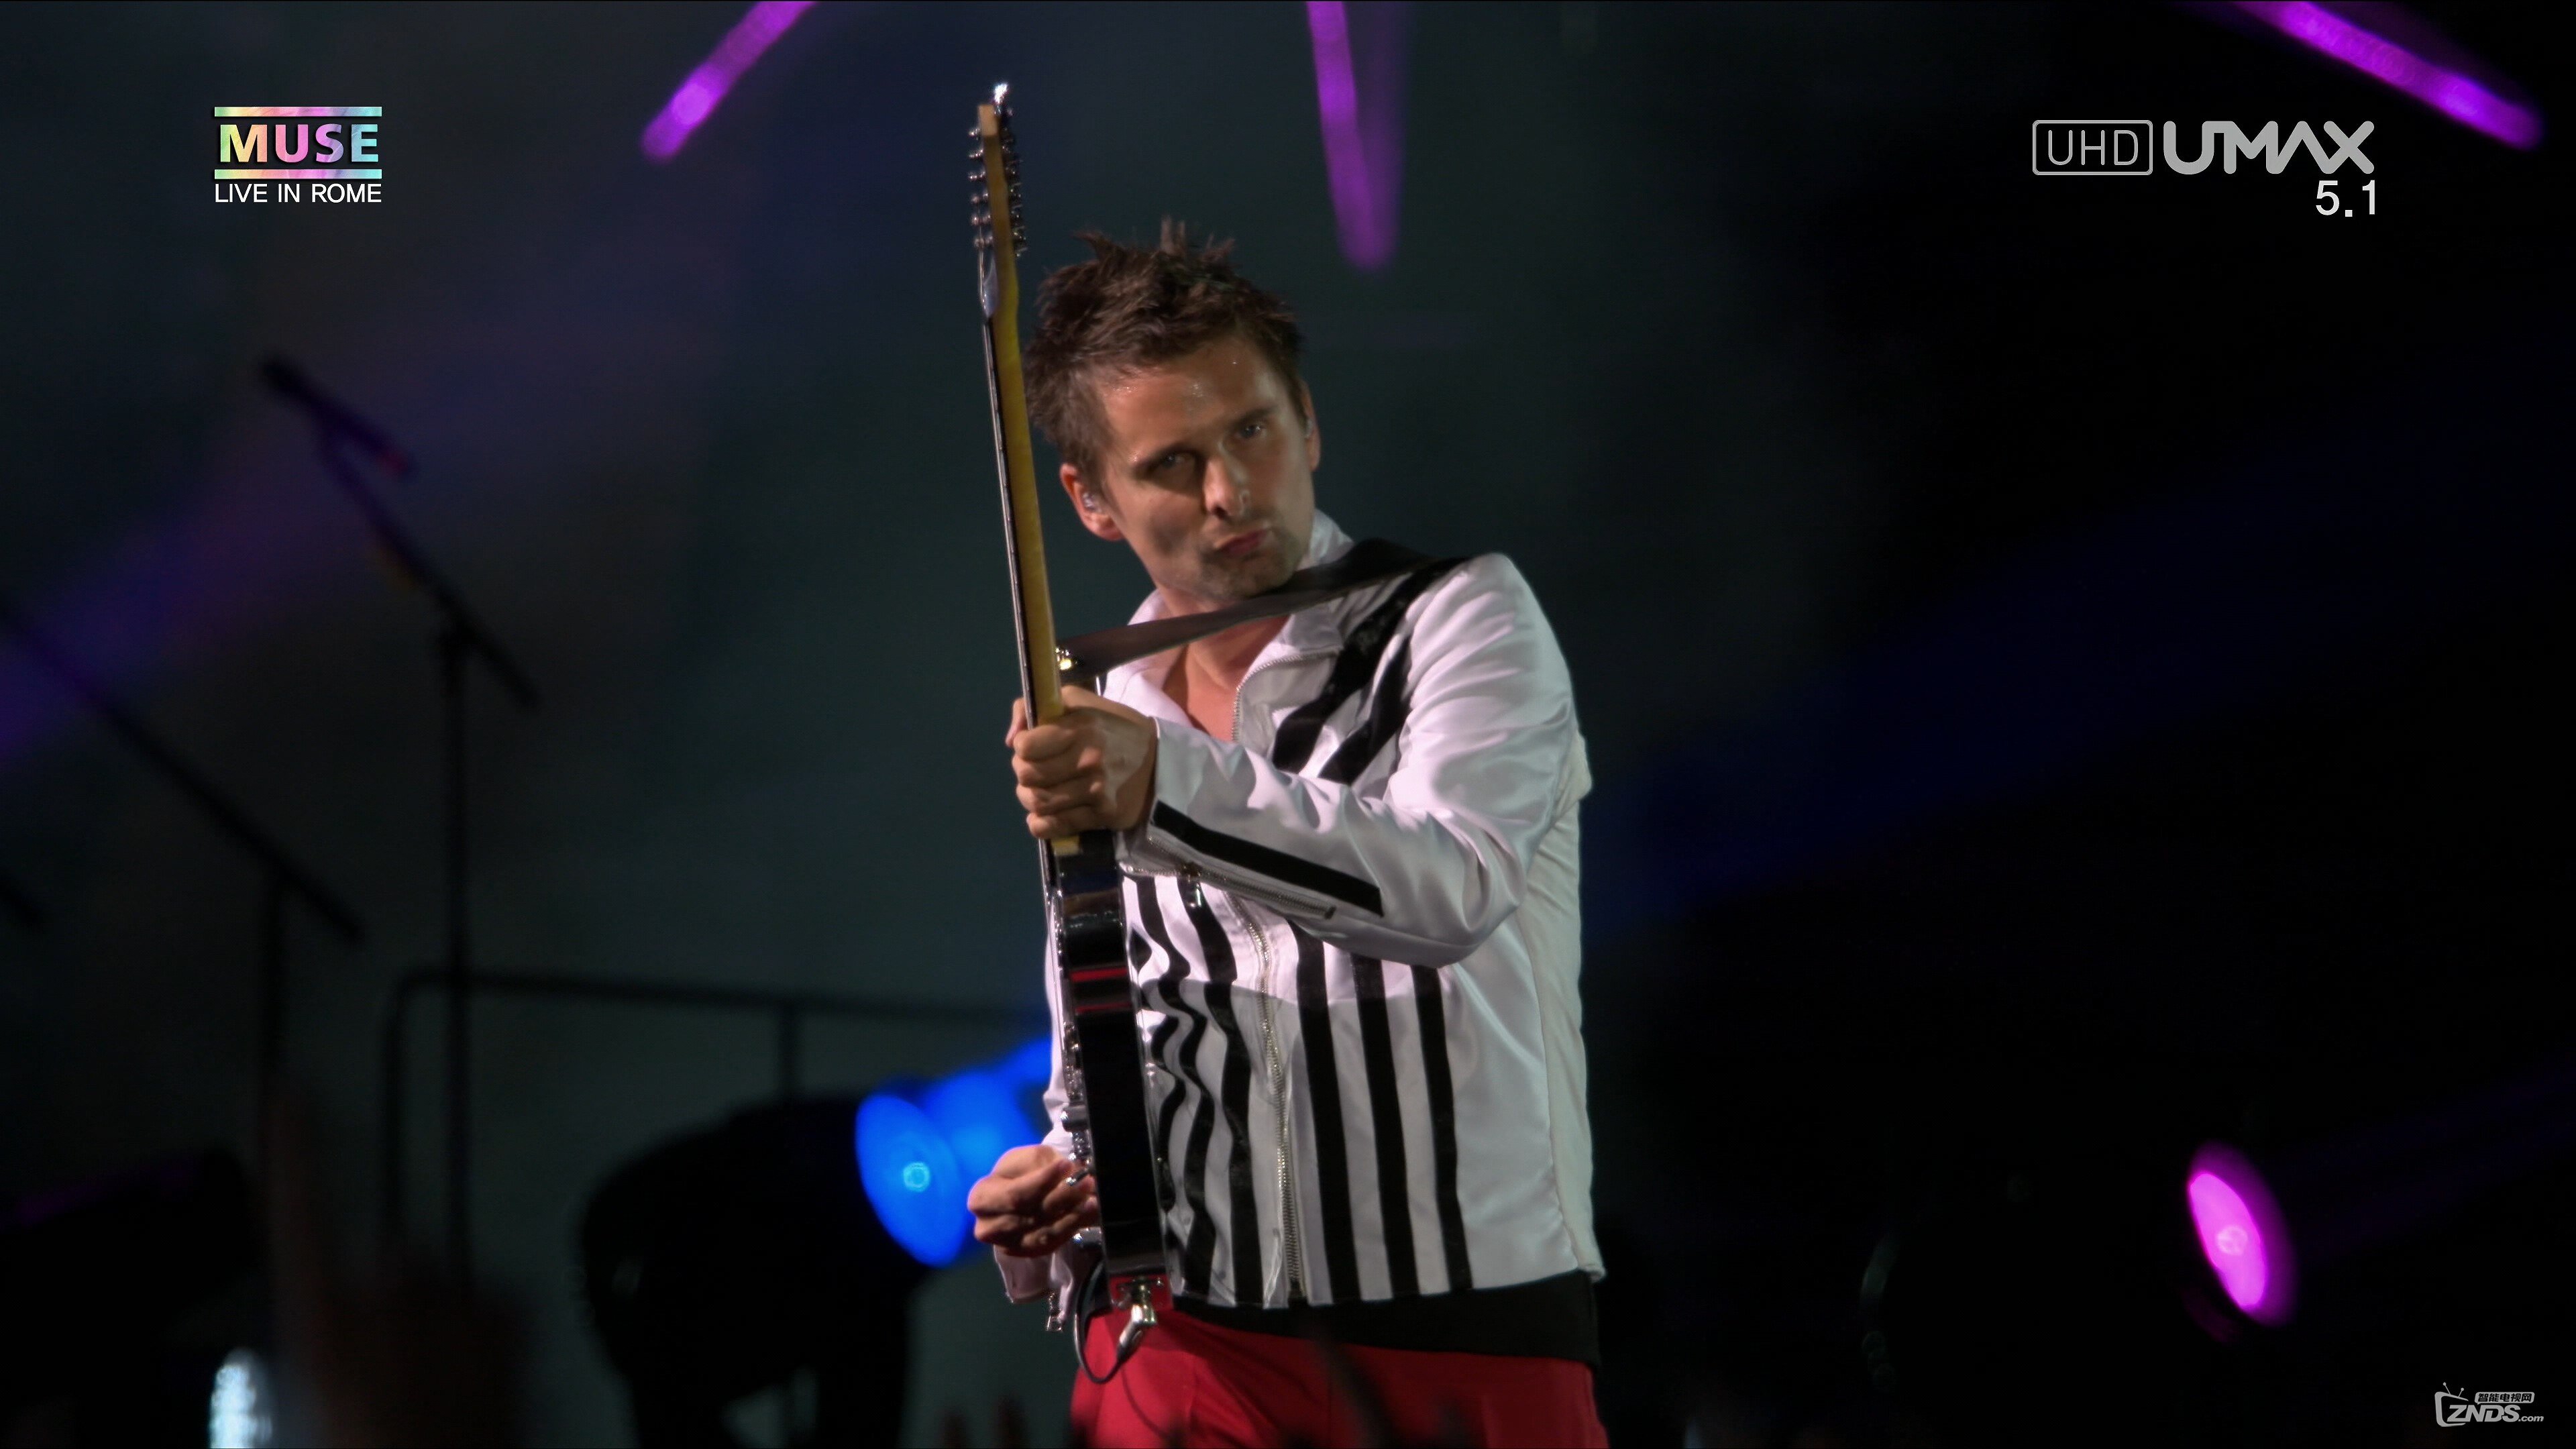 Muse.Live.At.Rome.Olympic.Stadium.2013.2160p.UHDTV.HEVC.mkv_20160312_225720.296.jpg